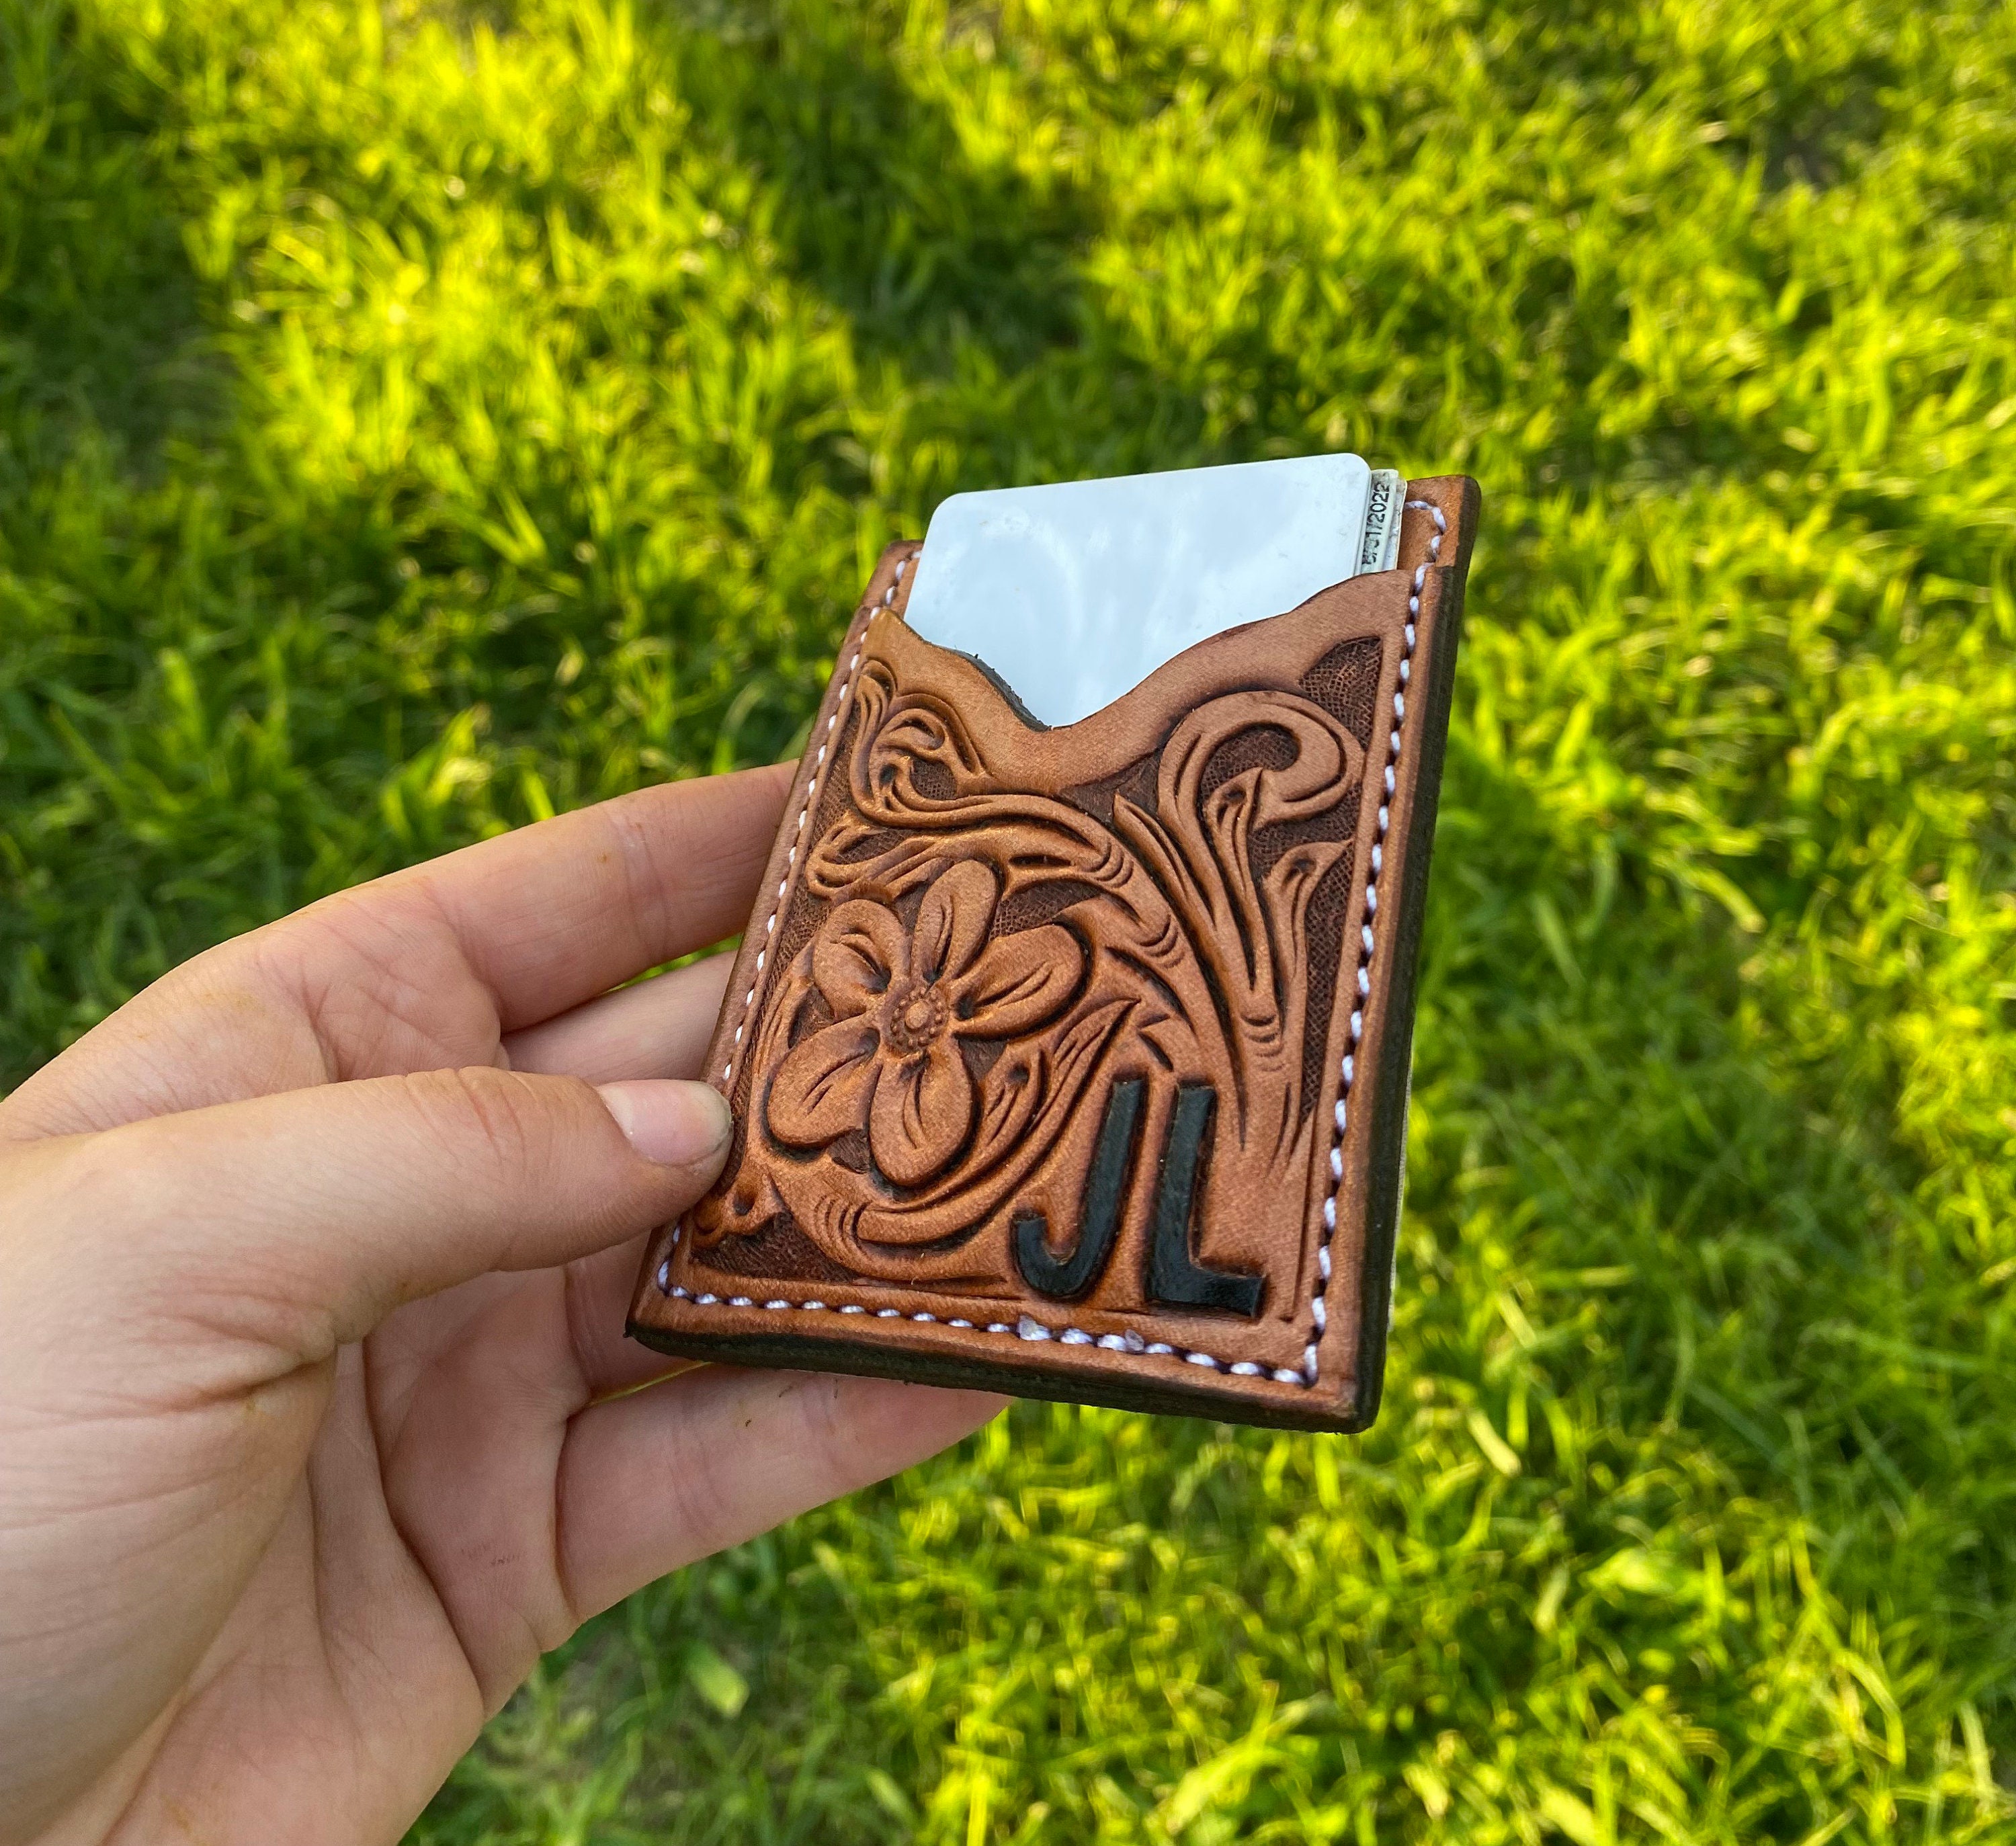 Vintage Brown Leather Money Clip Wallet #W513171NID